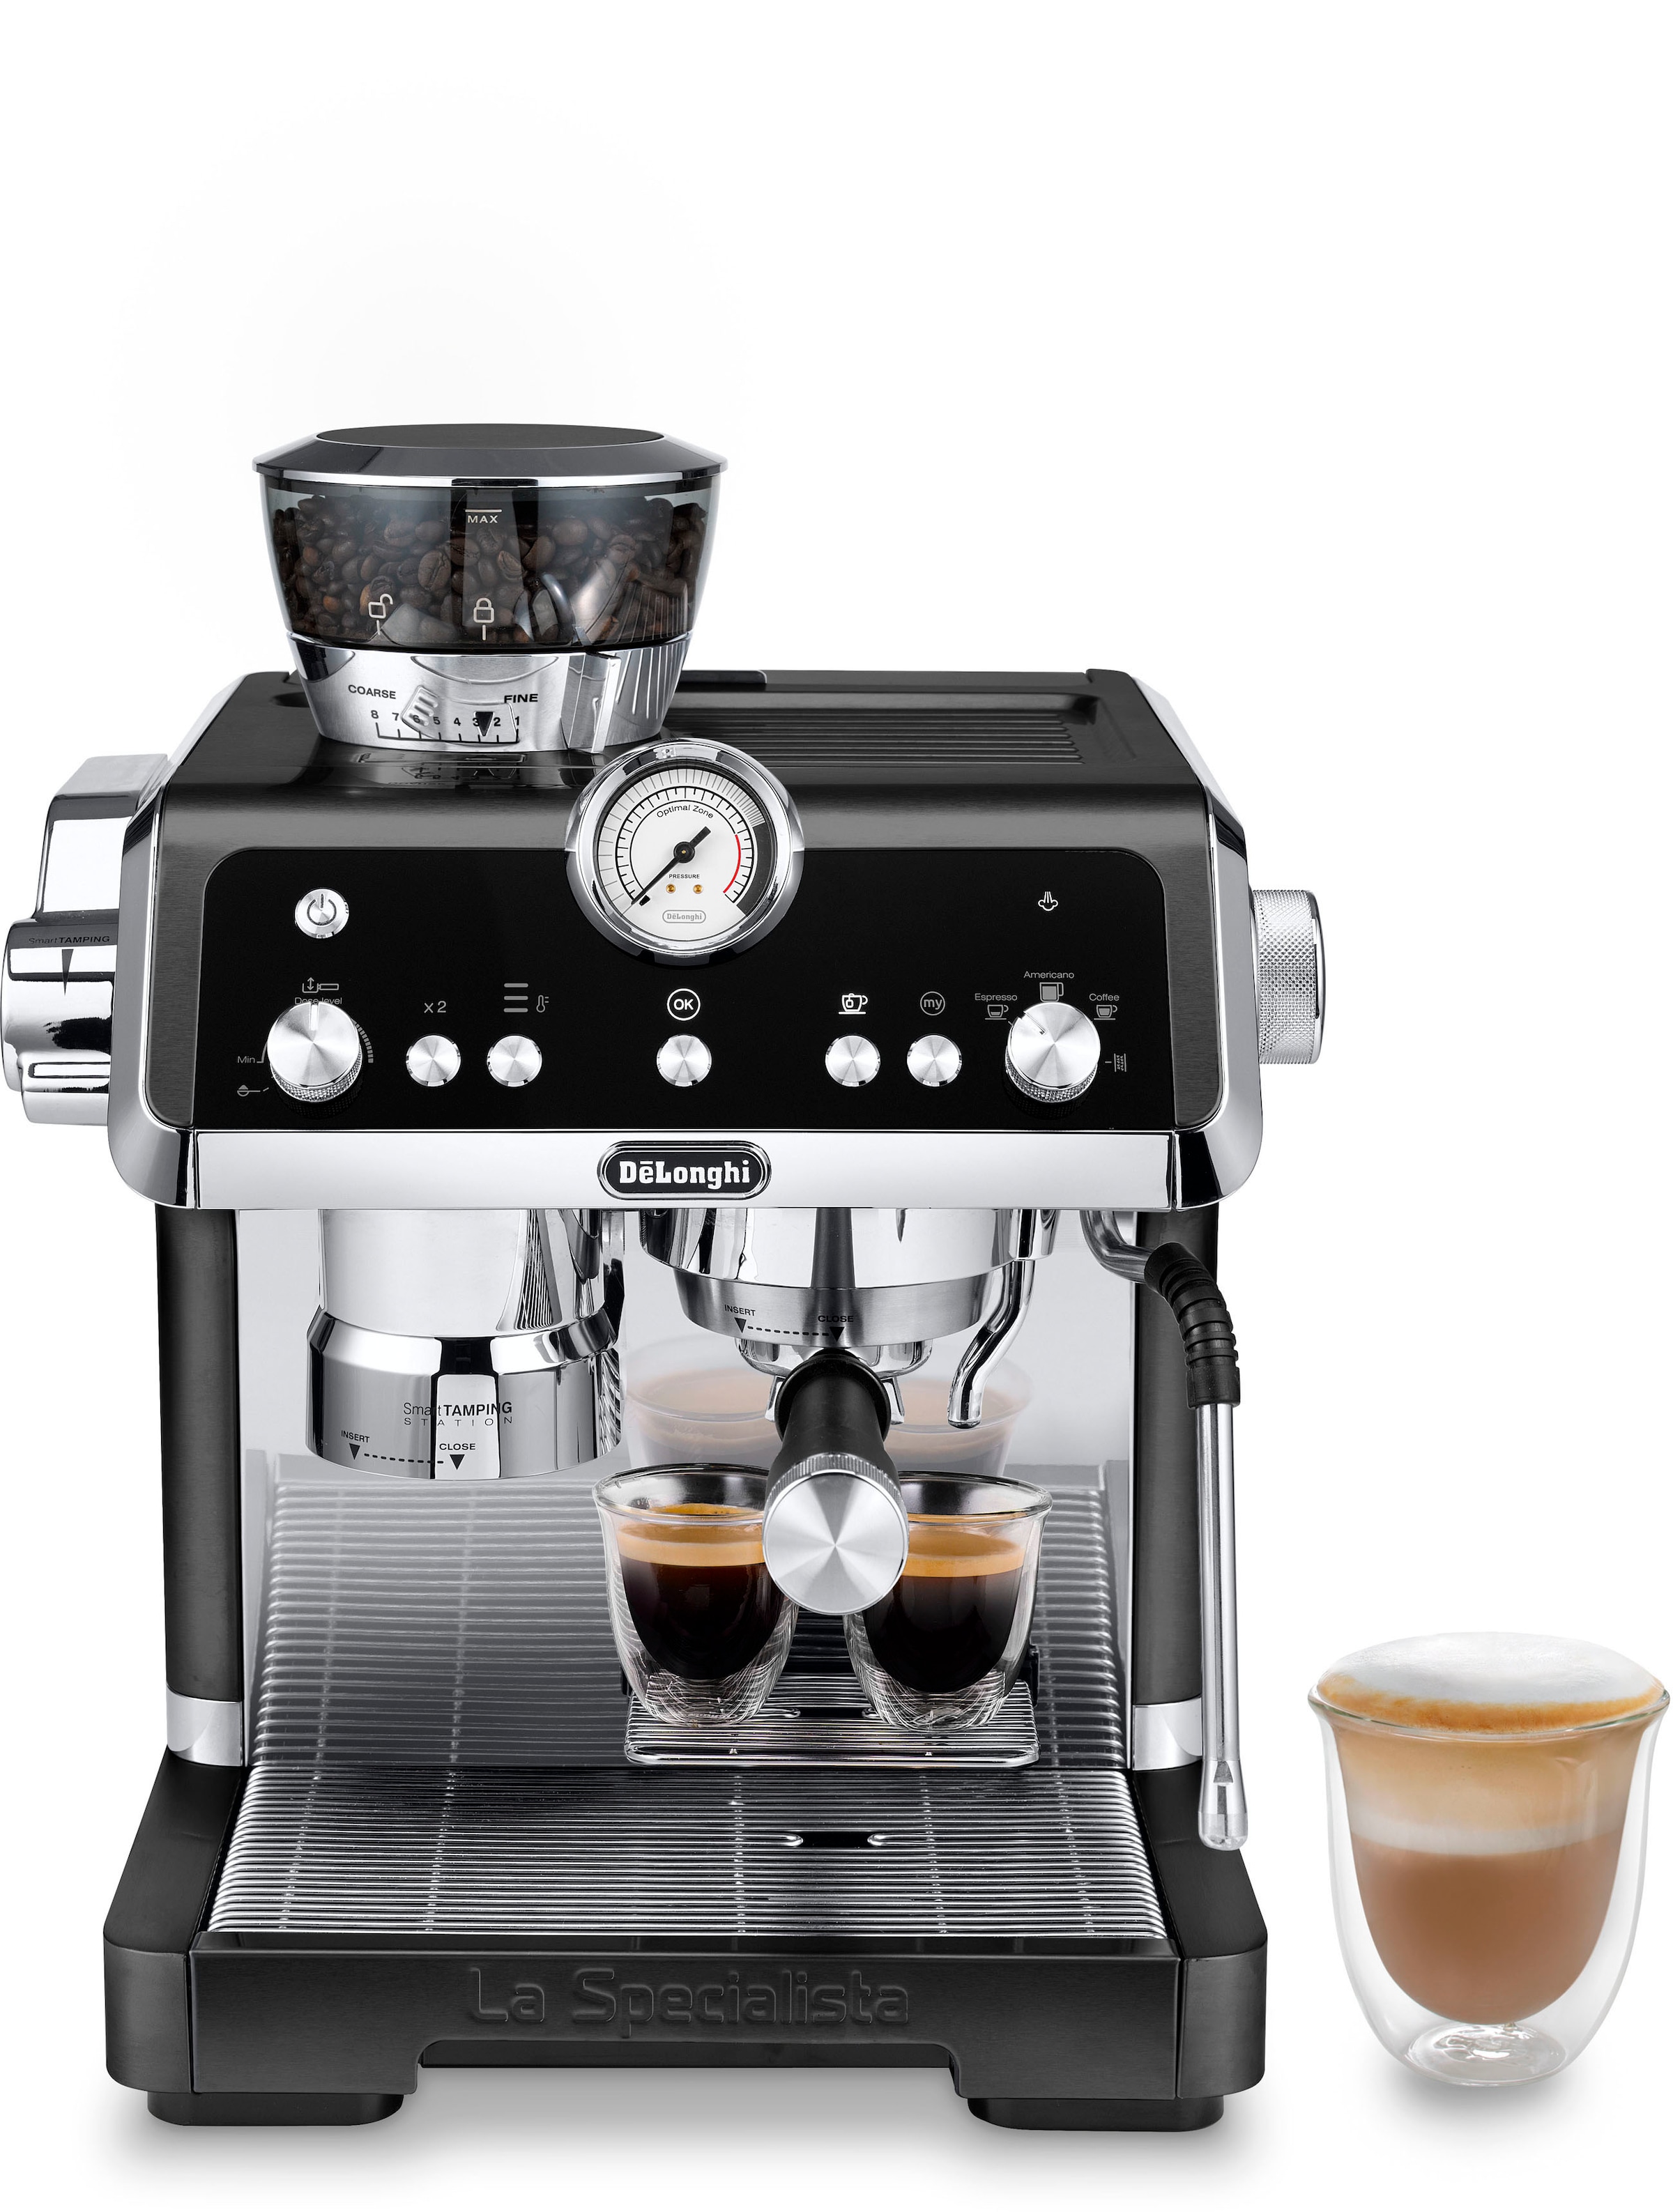 De'Longhi Espressomaschine »La Specialista Prestigio EC9355.BM«, Siebträger, inkl. 250g Kimbo Classic im Wert von UVP € 6,49